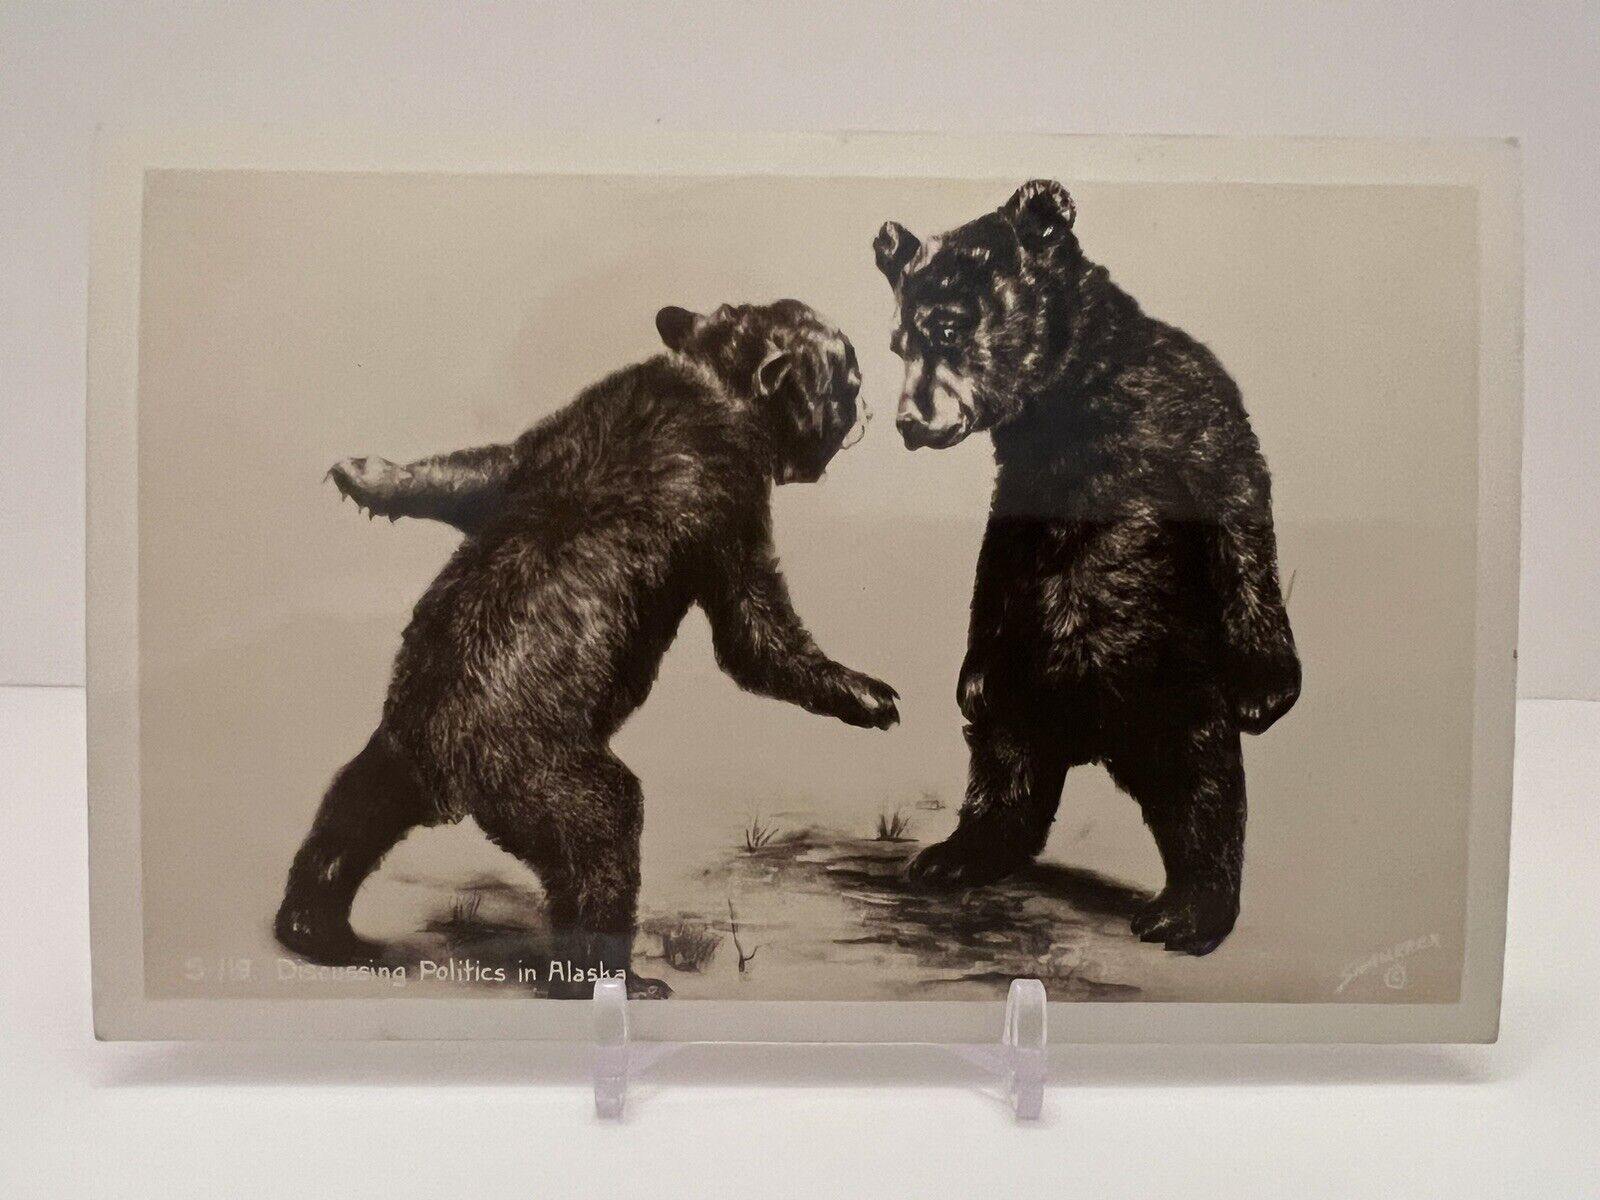 Vintage 1910 Discussing Politics Alaska Start Something Fighting Bears Postcard